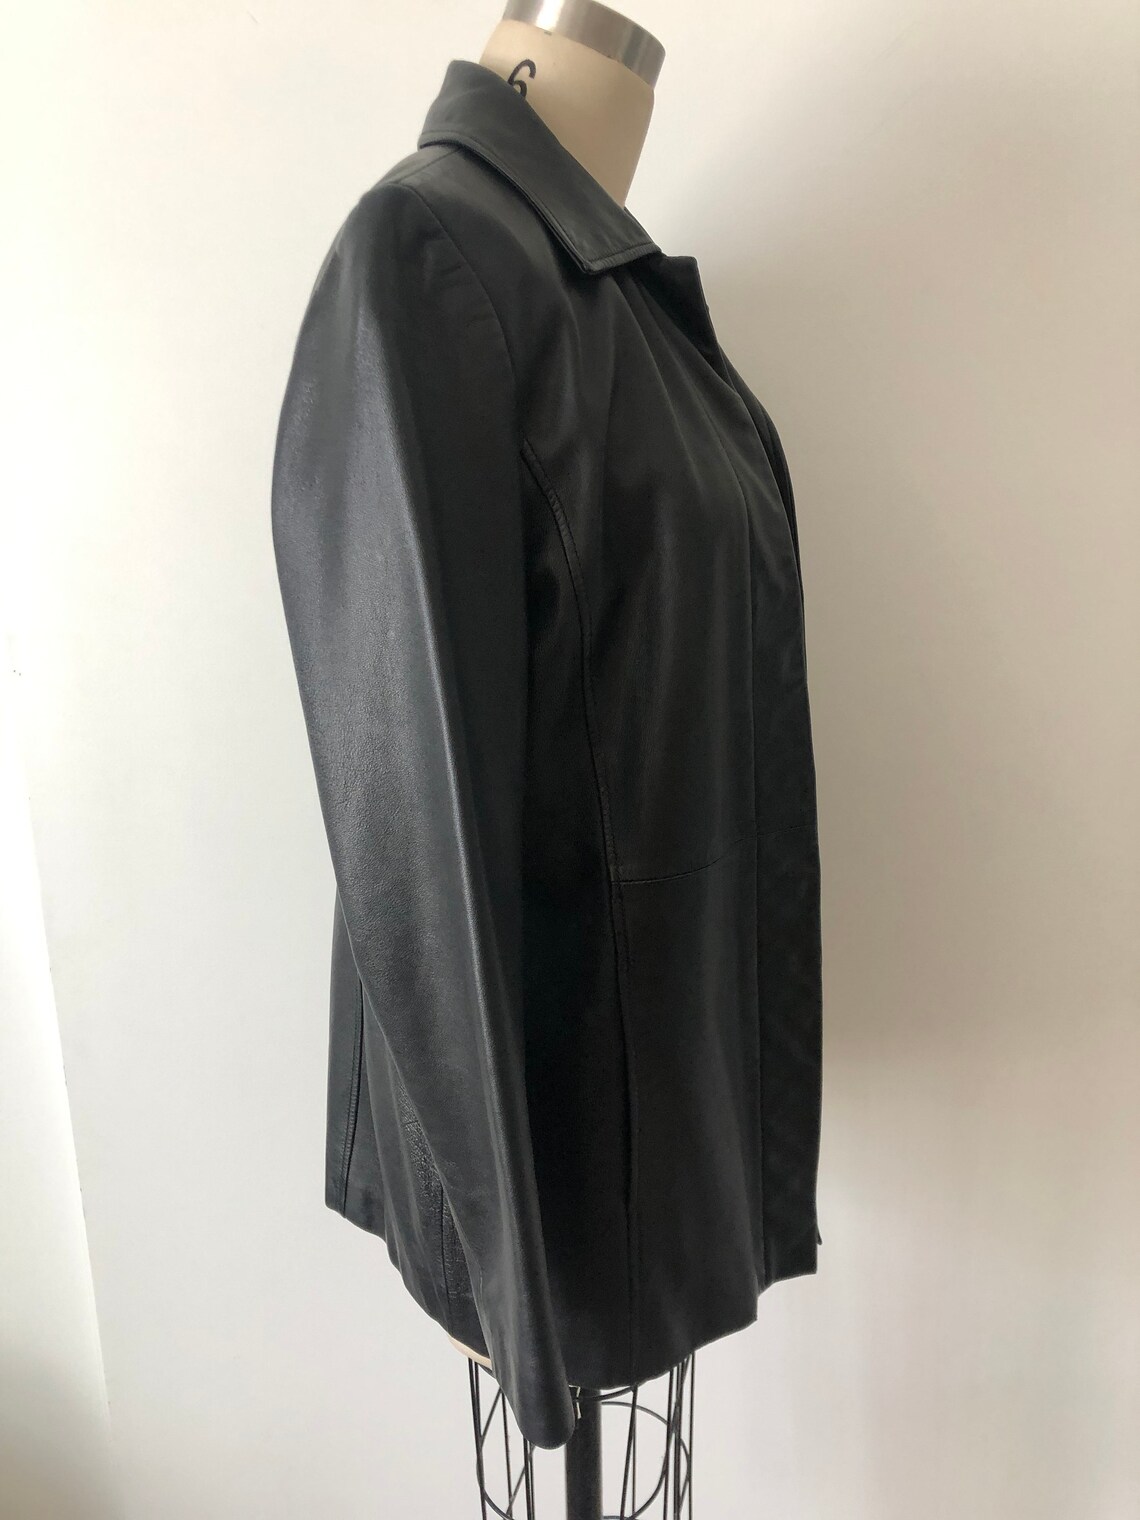 Y2K Super Soft Black Leather Snap Button Collared Jacket Coat | Etsy